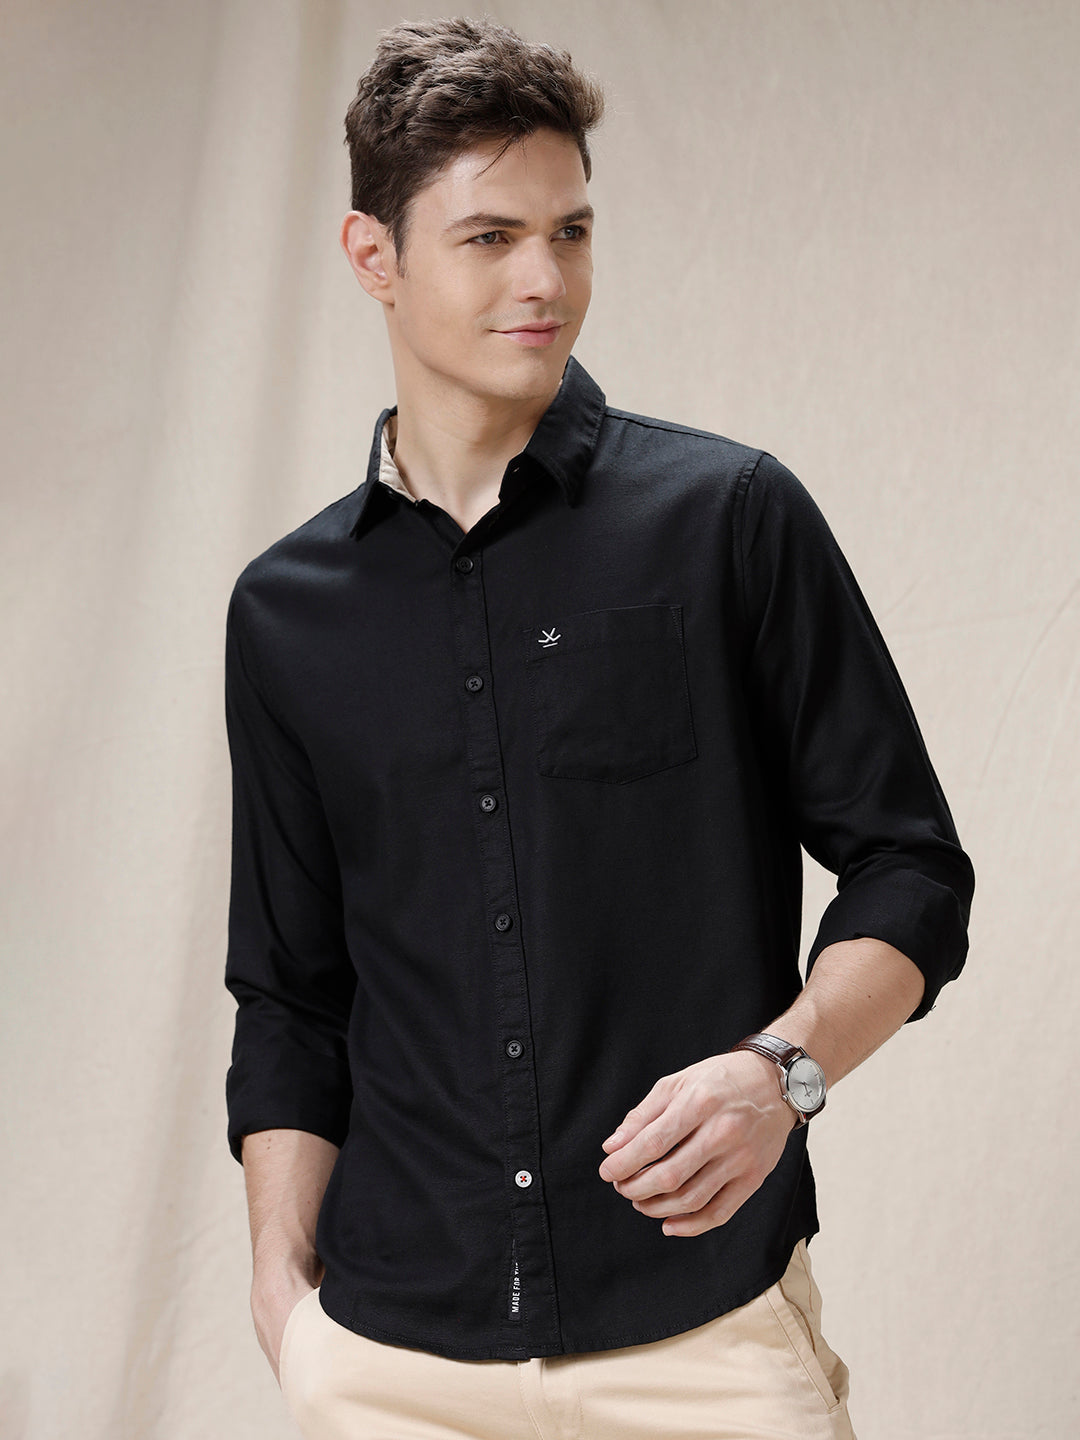 Solid Black Formal Shirt